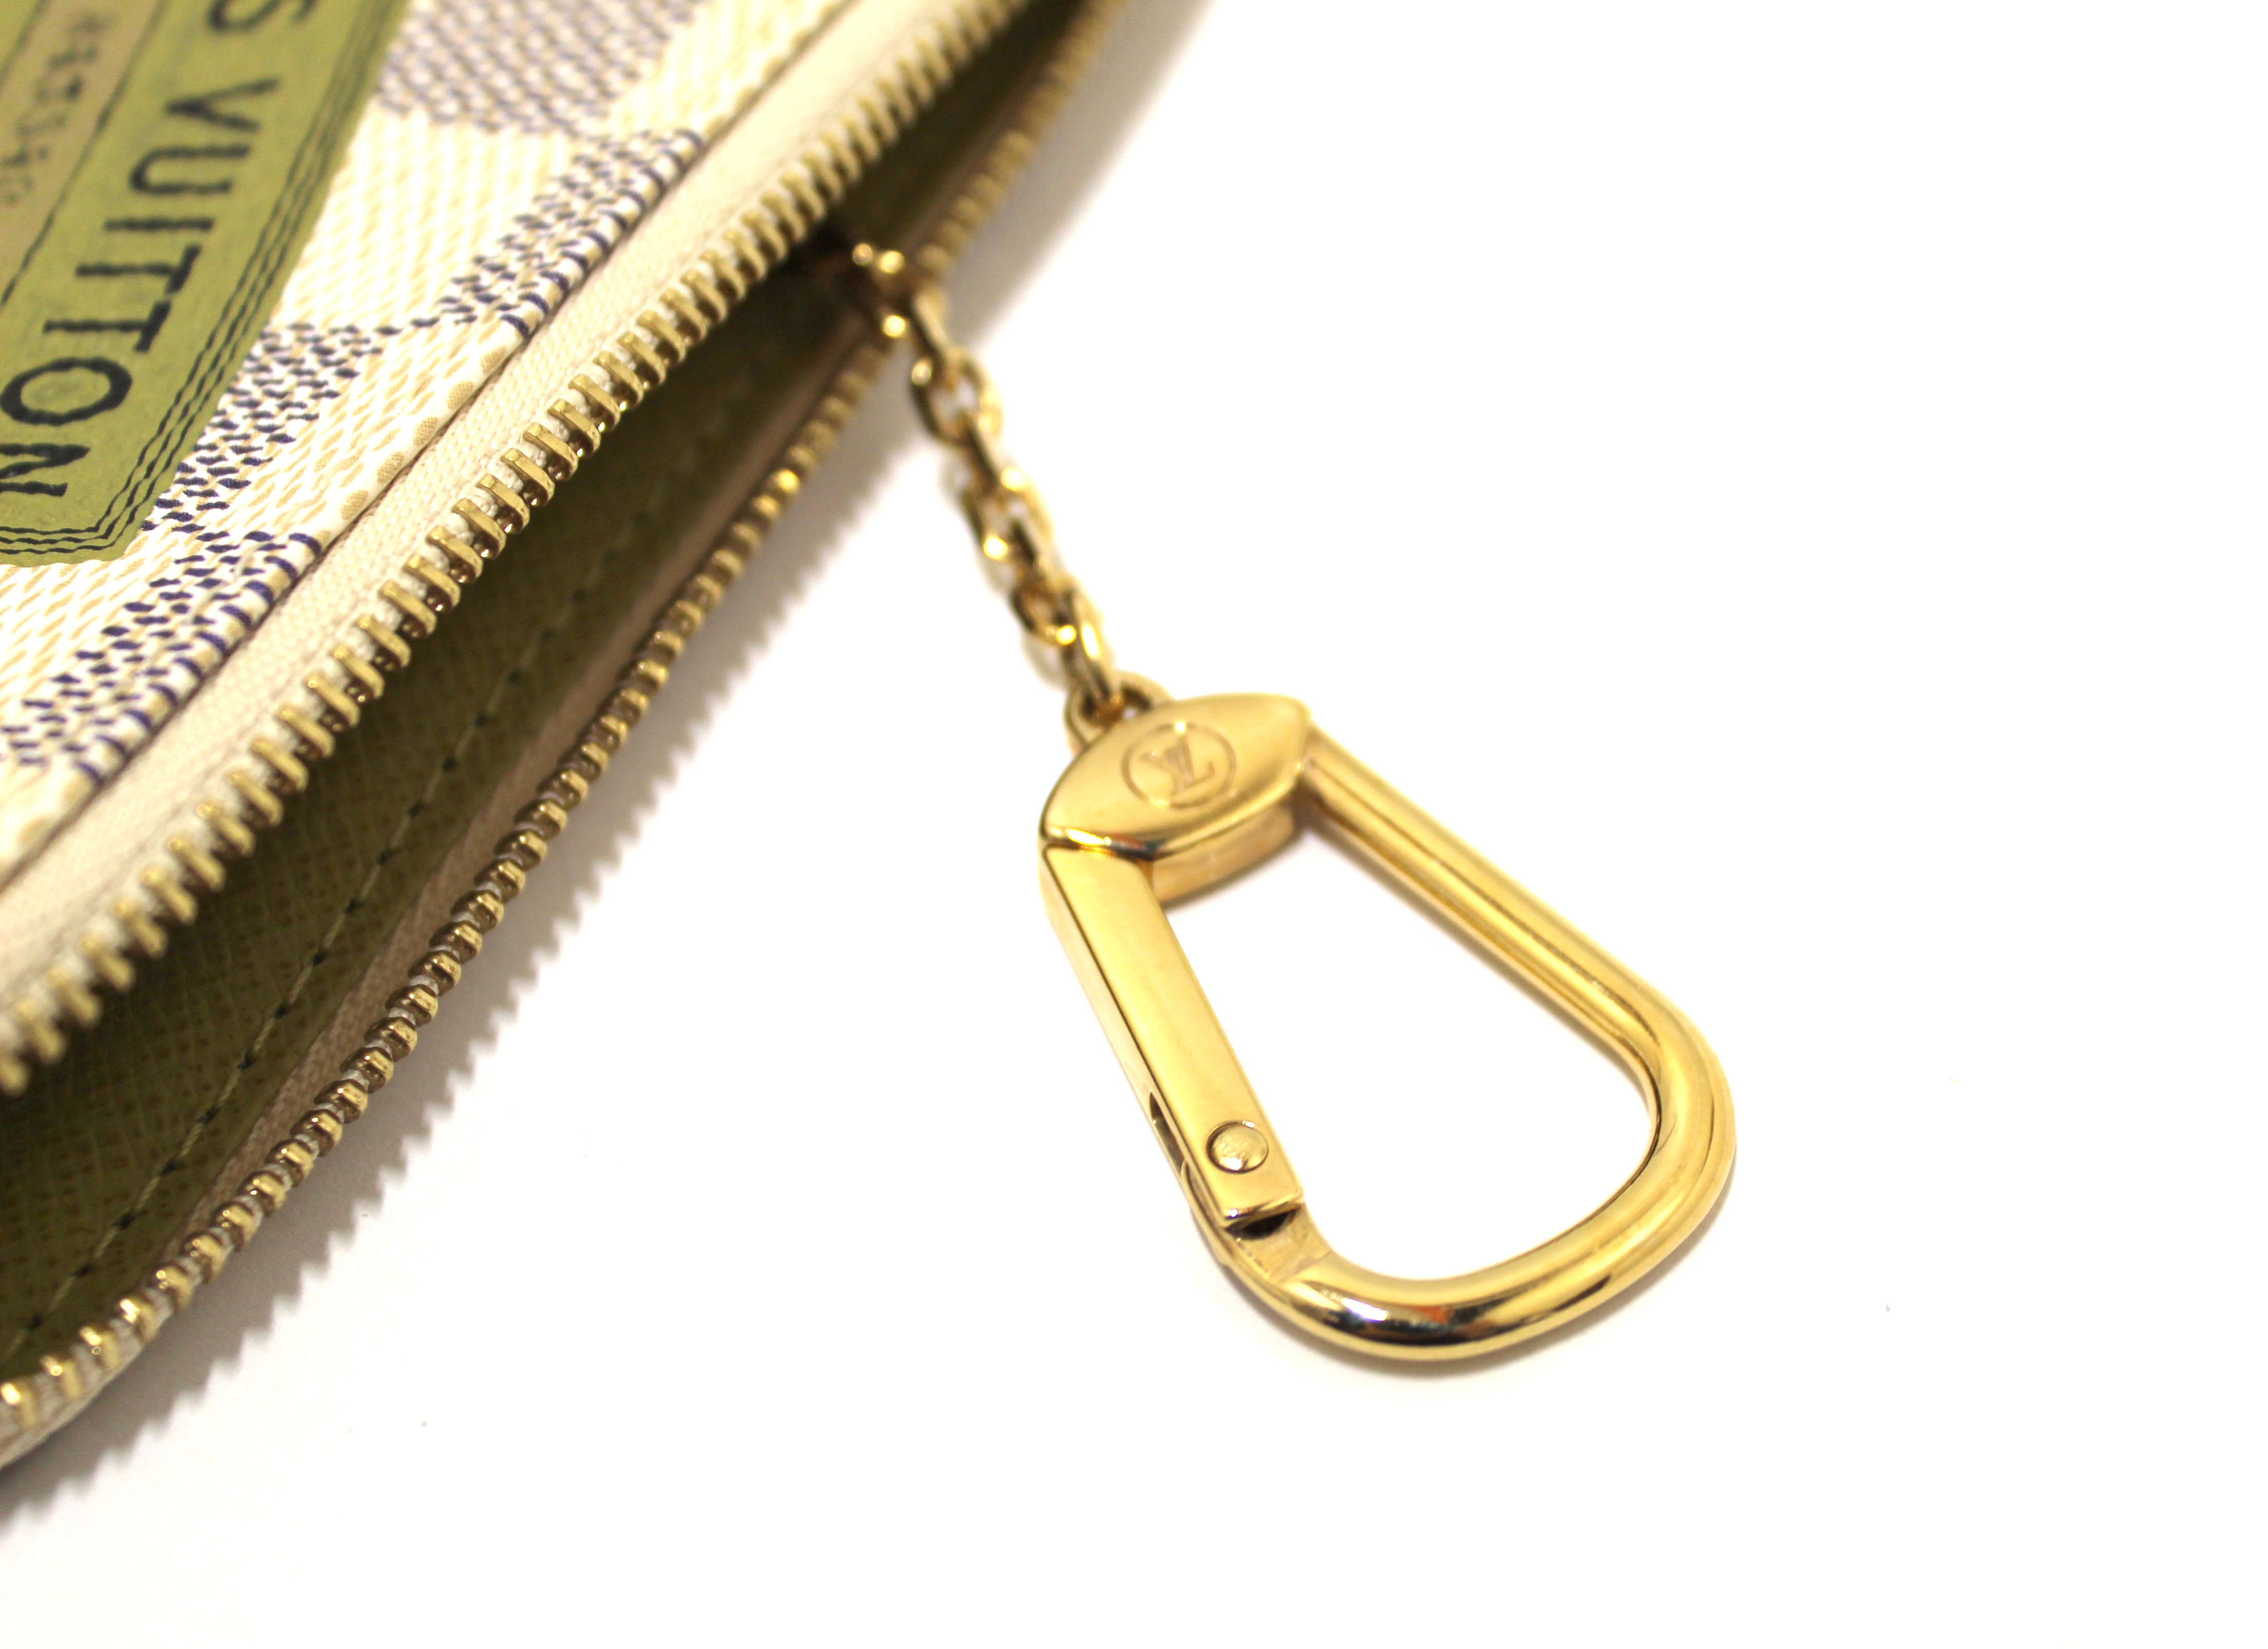 Louis Vuitton Coin case Mini Purse Damier Azur White Key Chain Leather  #462D